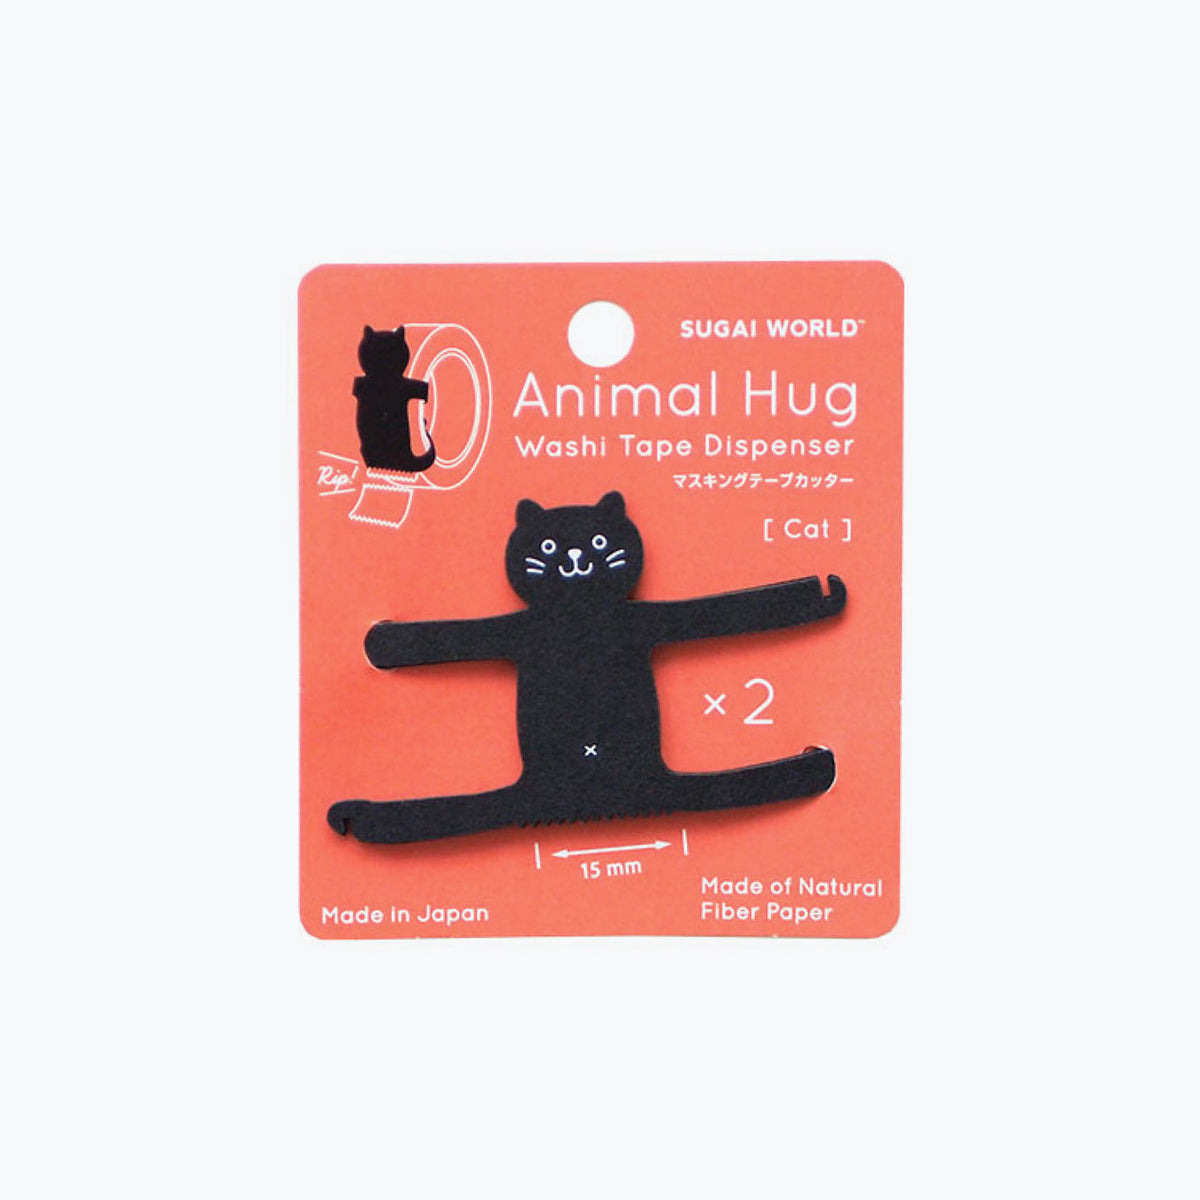 Sugai World - Washi Tape Dispenser - Animal Hug - Cat